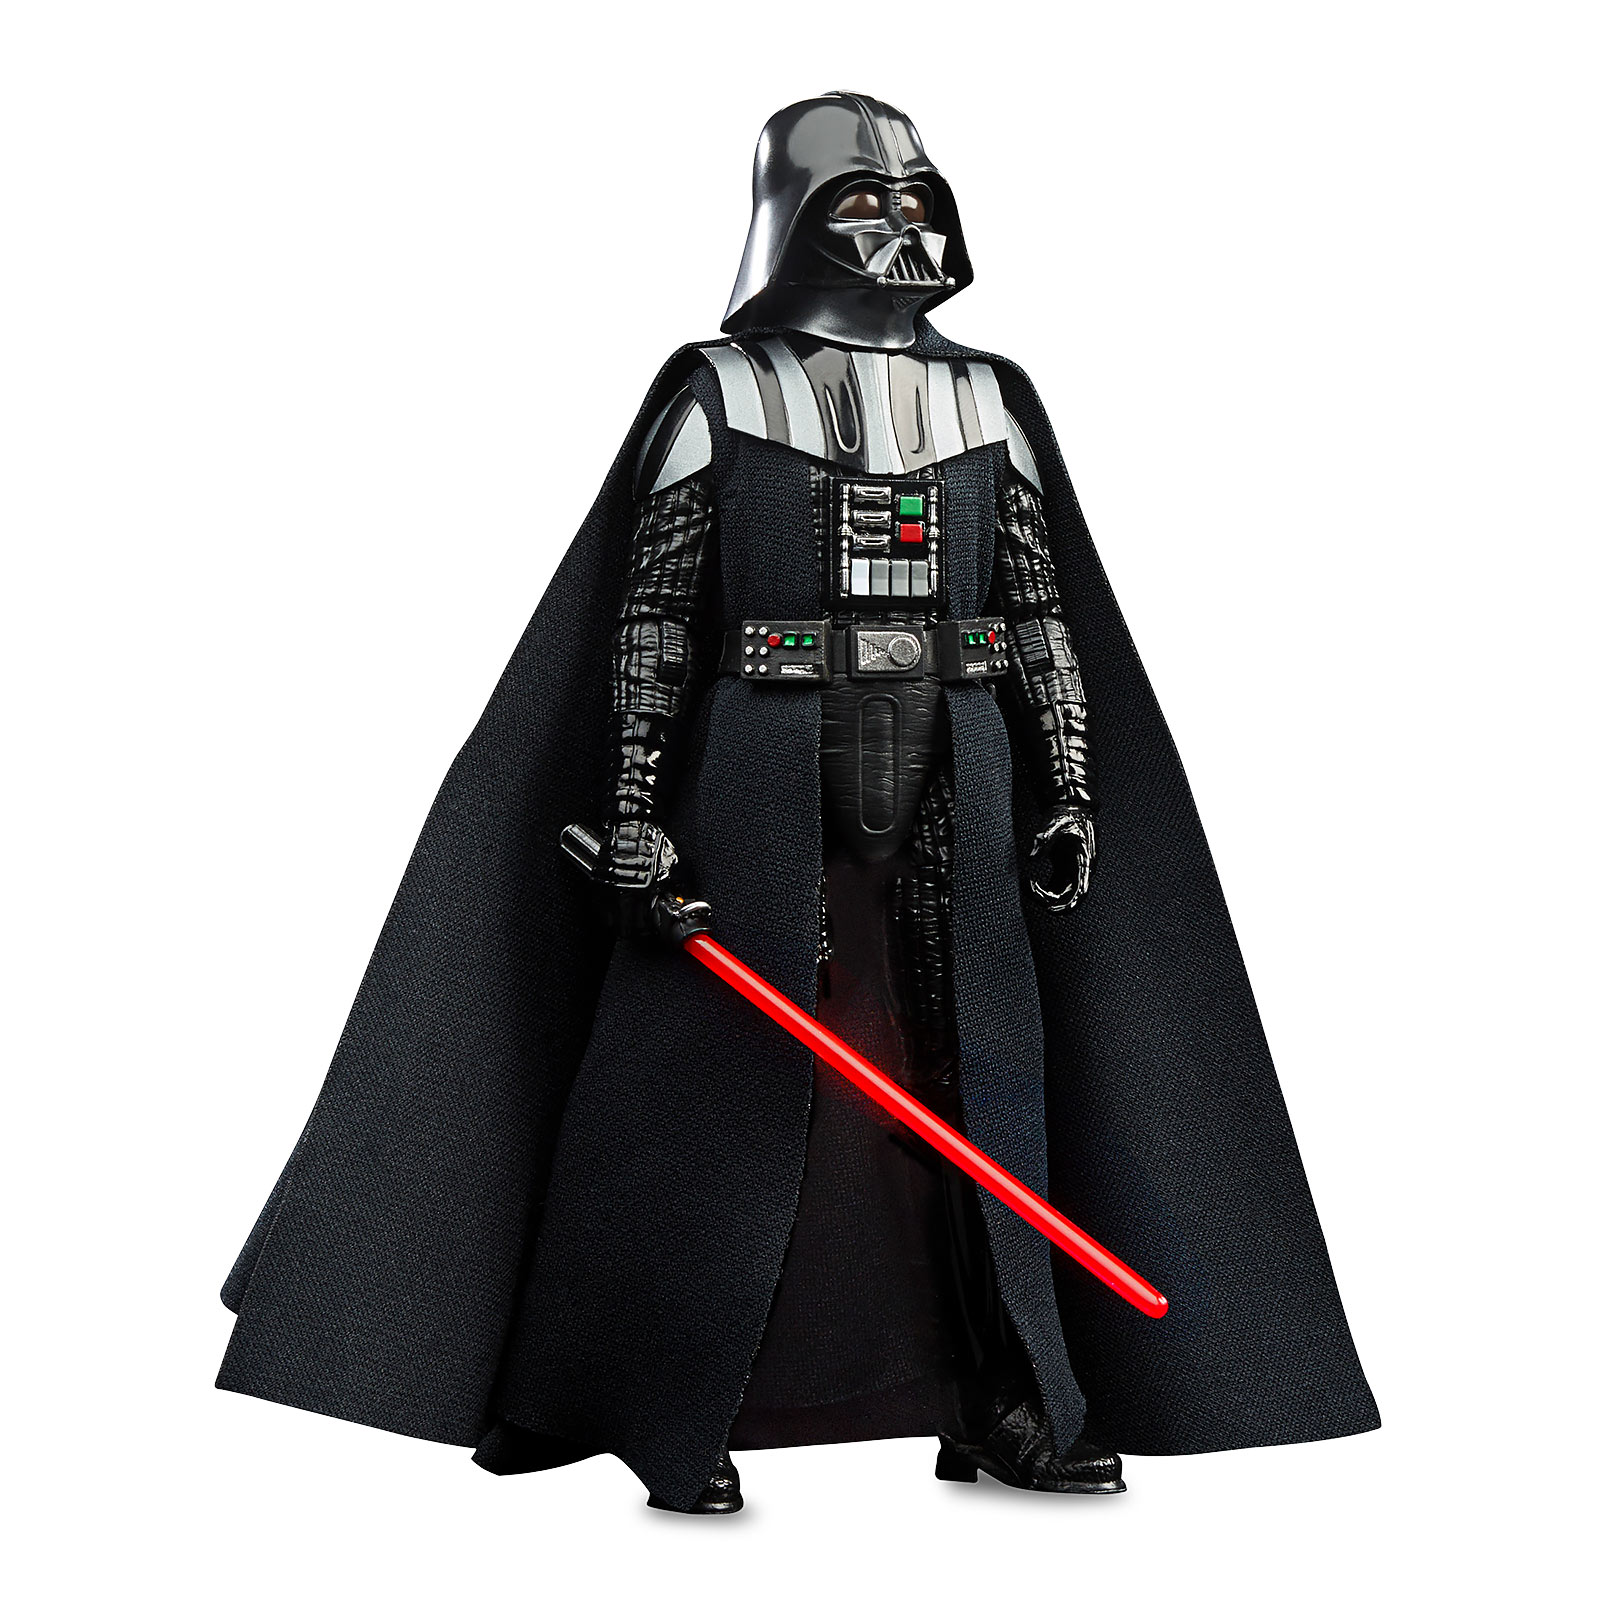 Darth Vader Action Figure - Star Wars Obi-Wan Kenobi